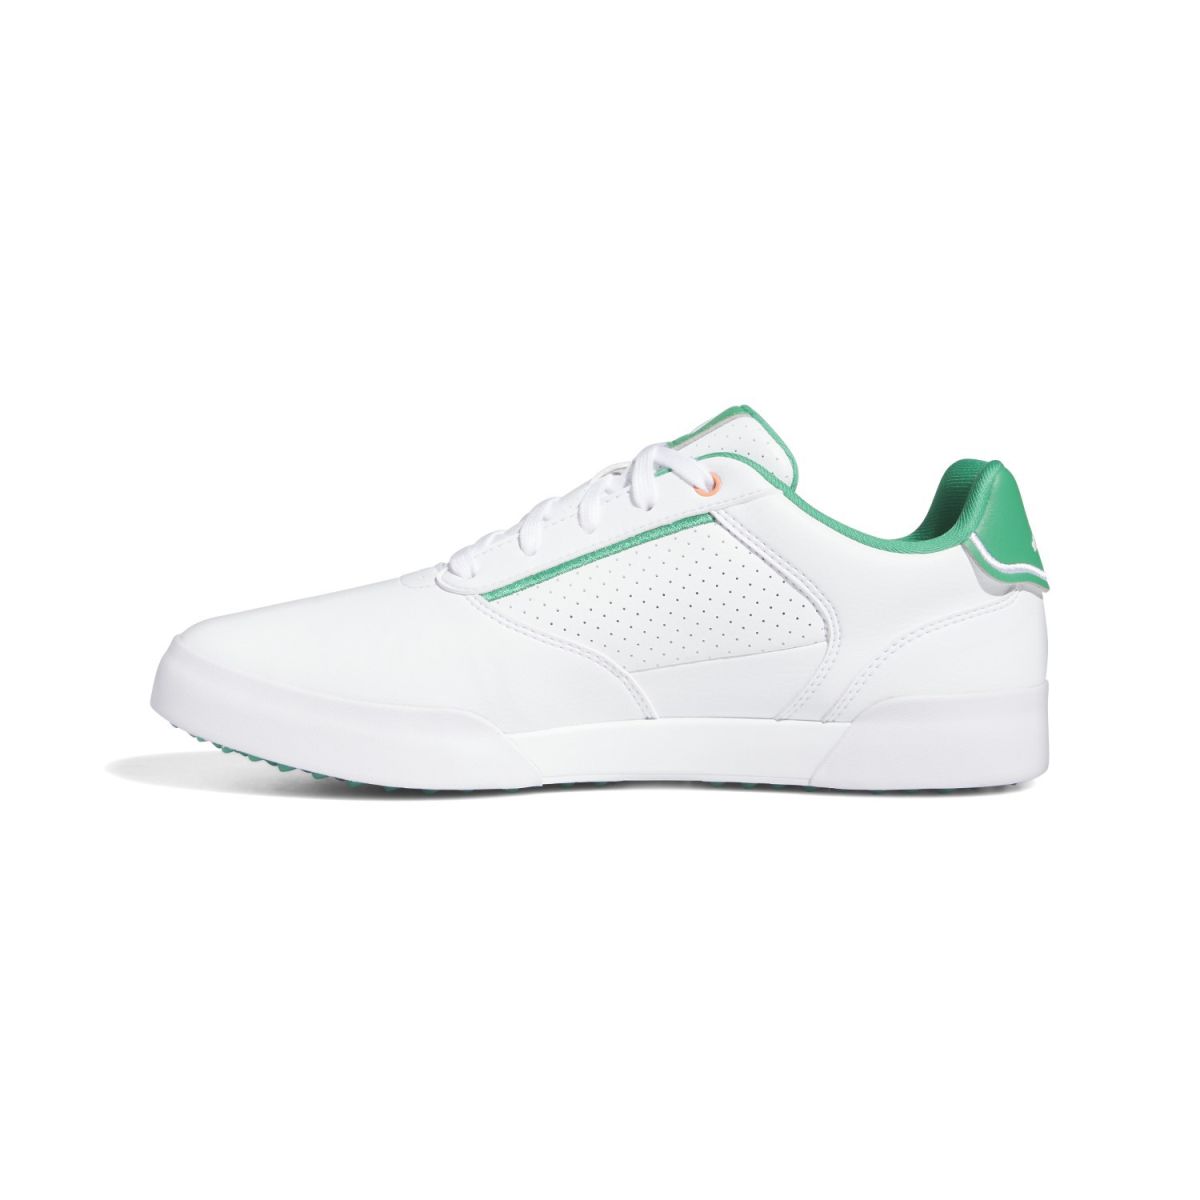 adidas retrocross white green 40